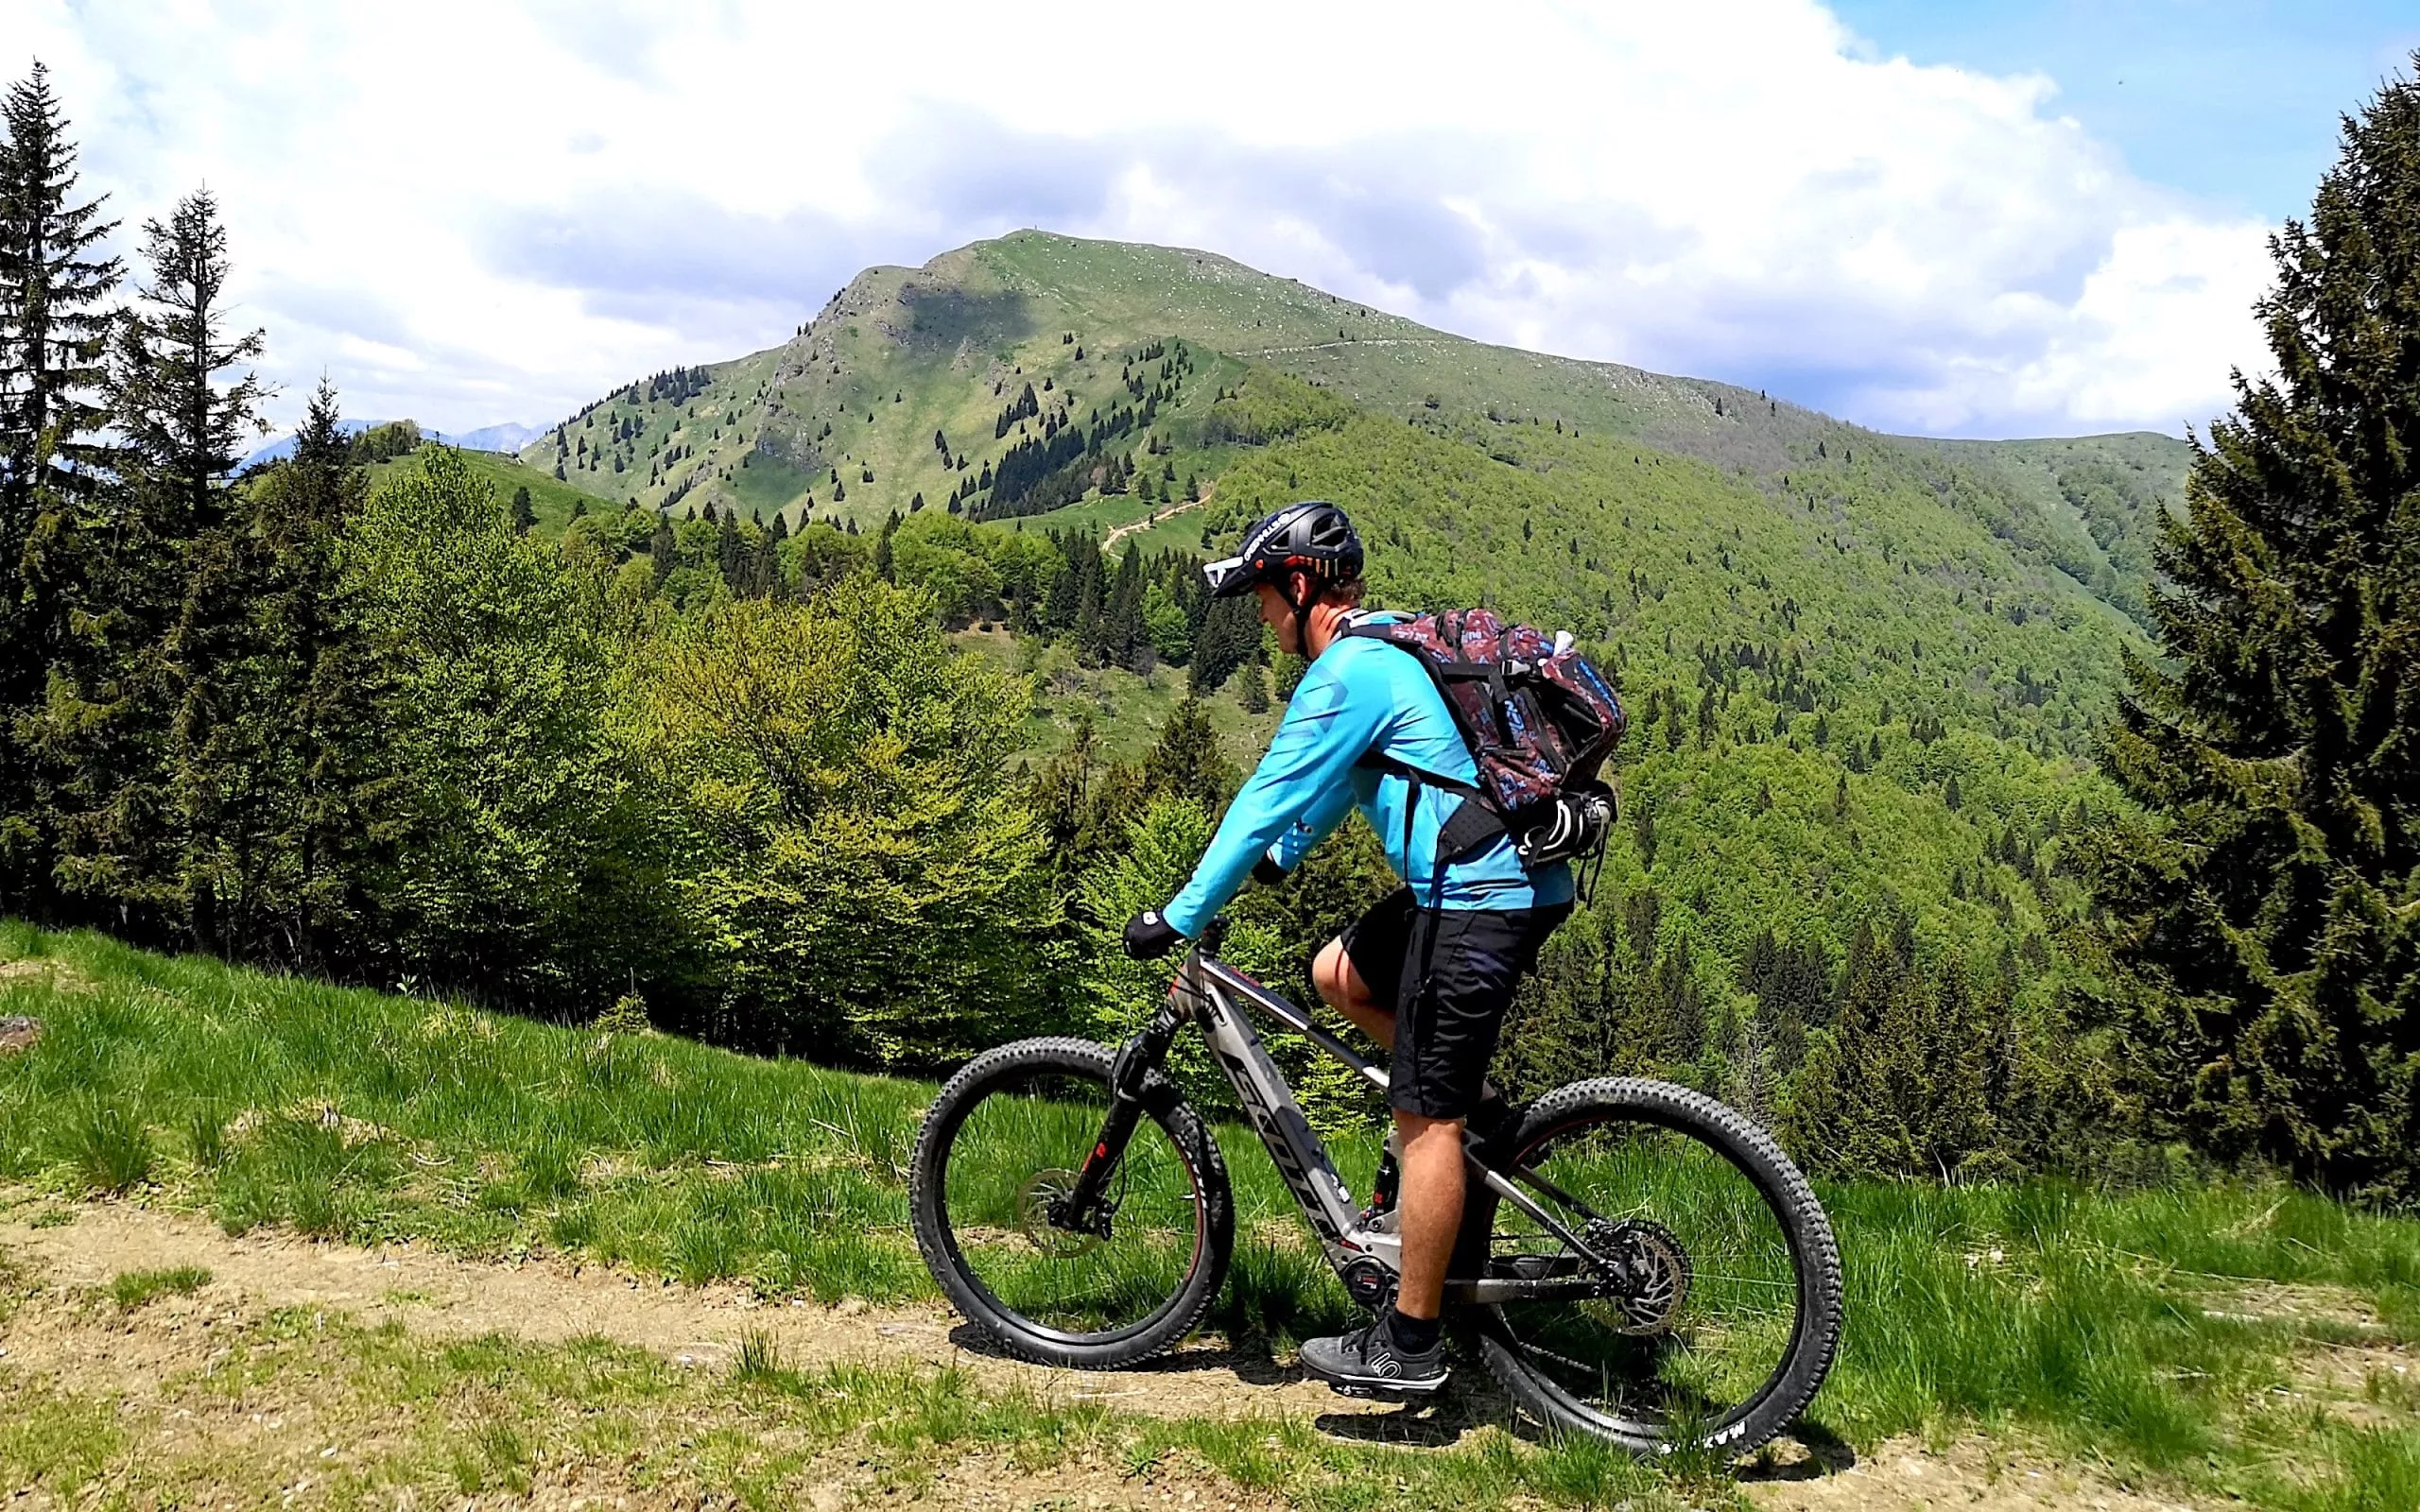 Loka Mountain Trail in Slovenia, Europe | Trekking & Hiking,Mountain Biking - Rated 0.7